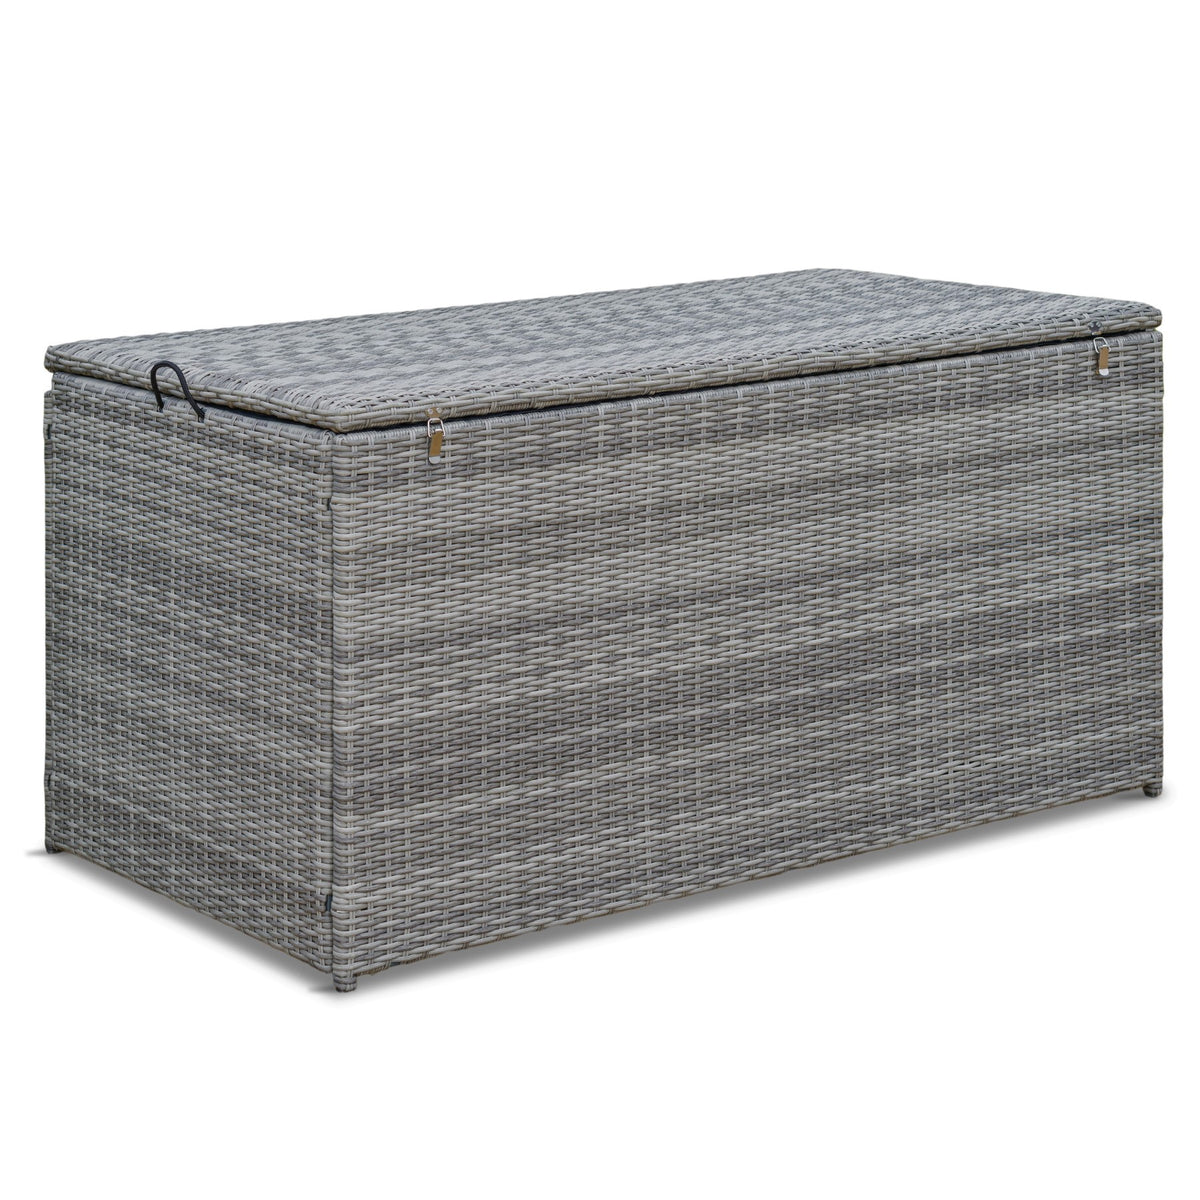 LG Outdoors Monte Carlo Stone Cushion Storage Box